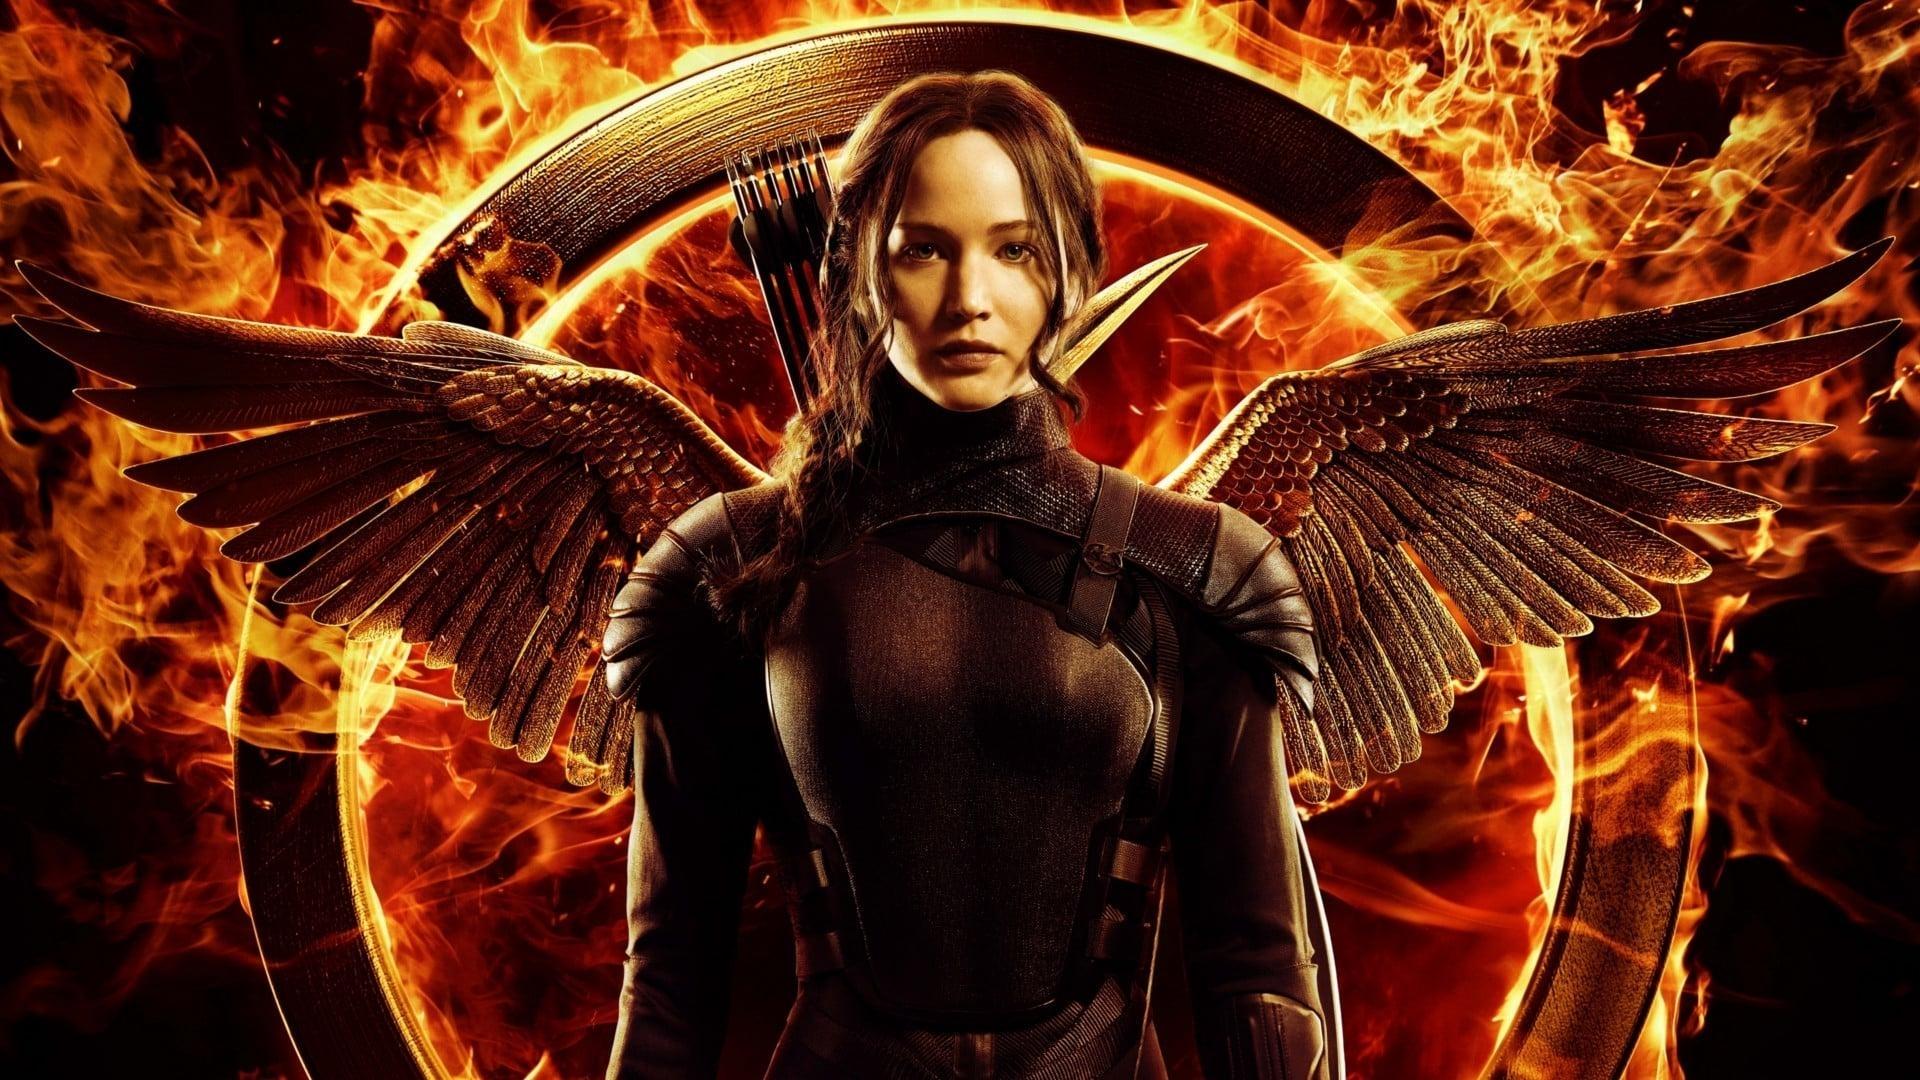 دانلود فیلم The Hunger Games: Mockingjay – Part 1 2014